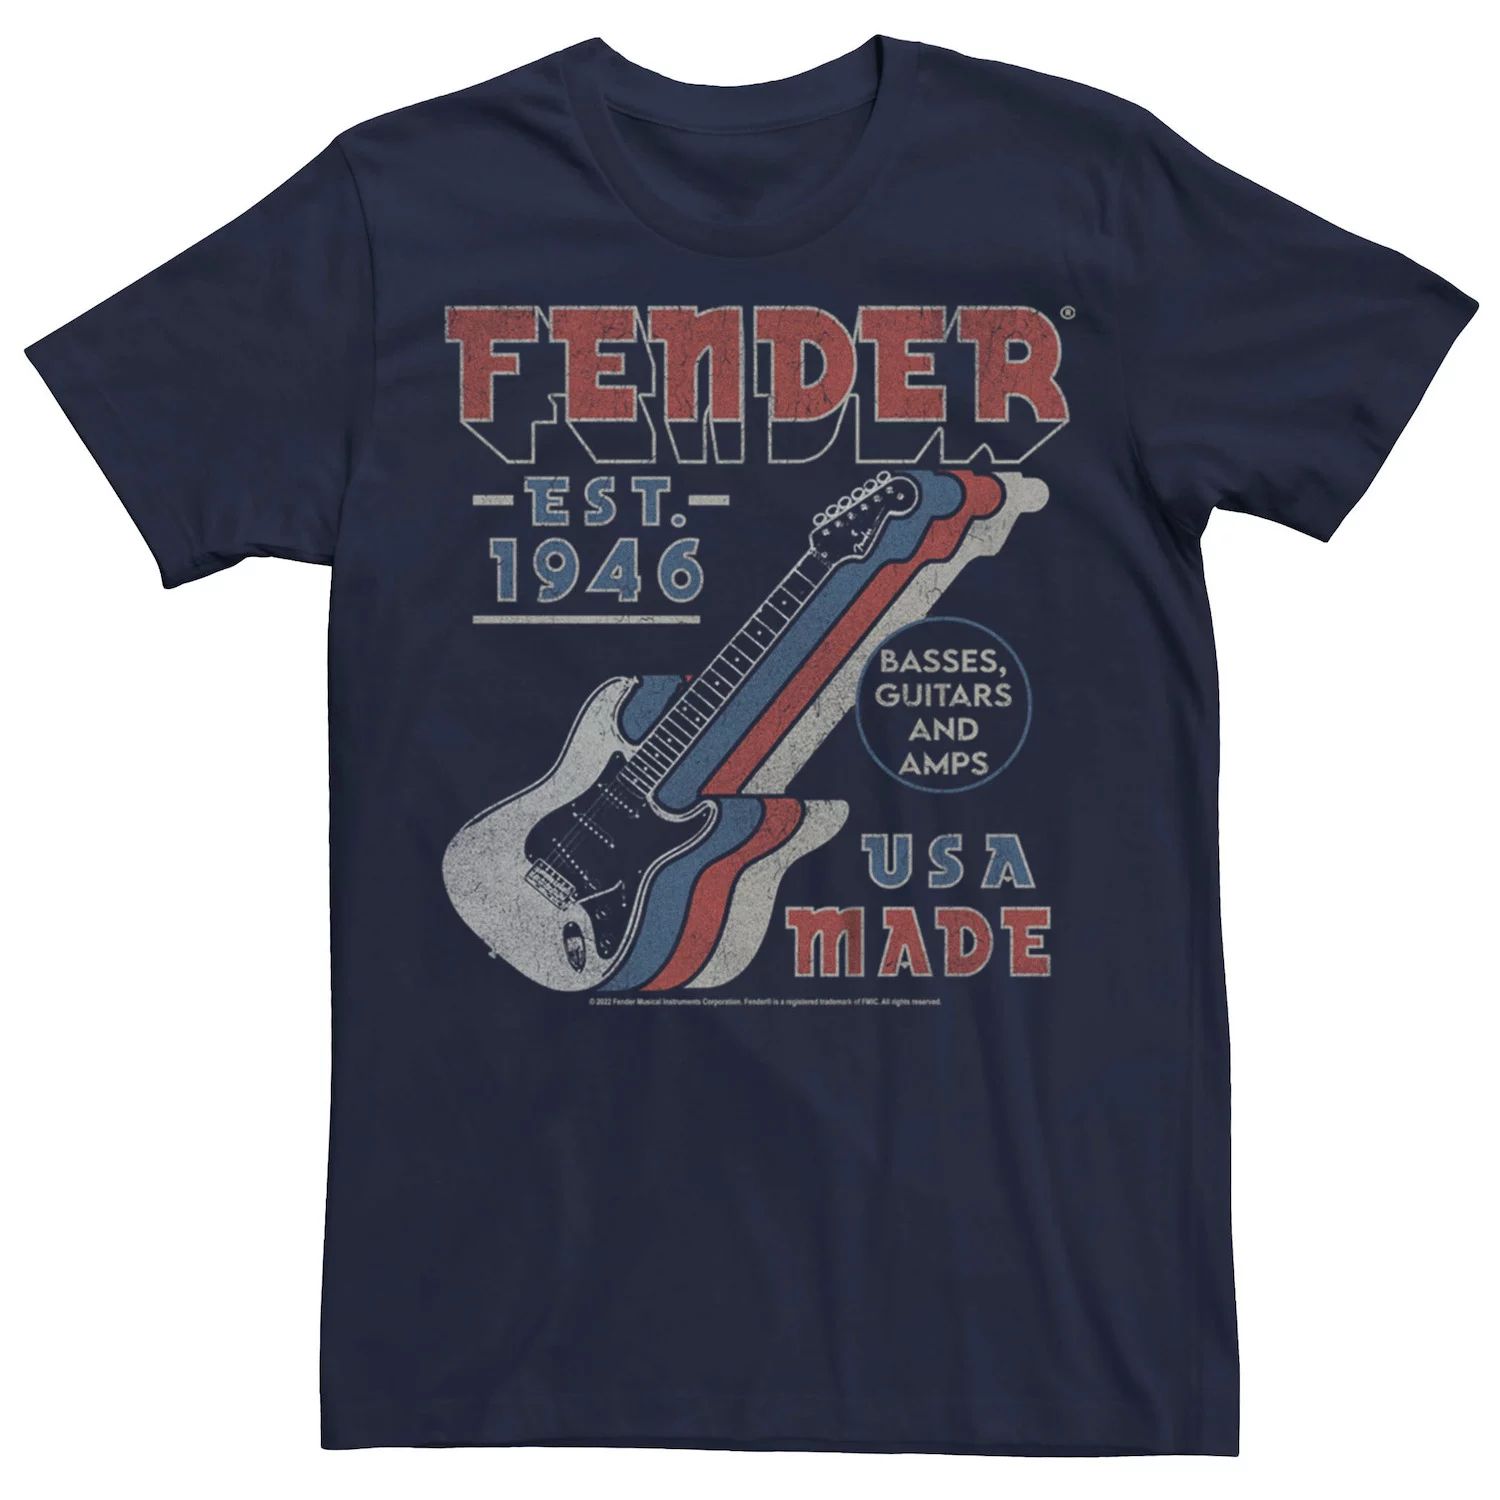 Мужская футболка с рекламой винтажной гитары Fender EST 1946 Licensed Character